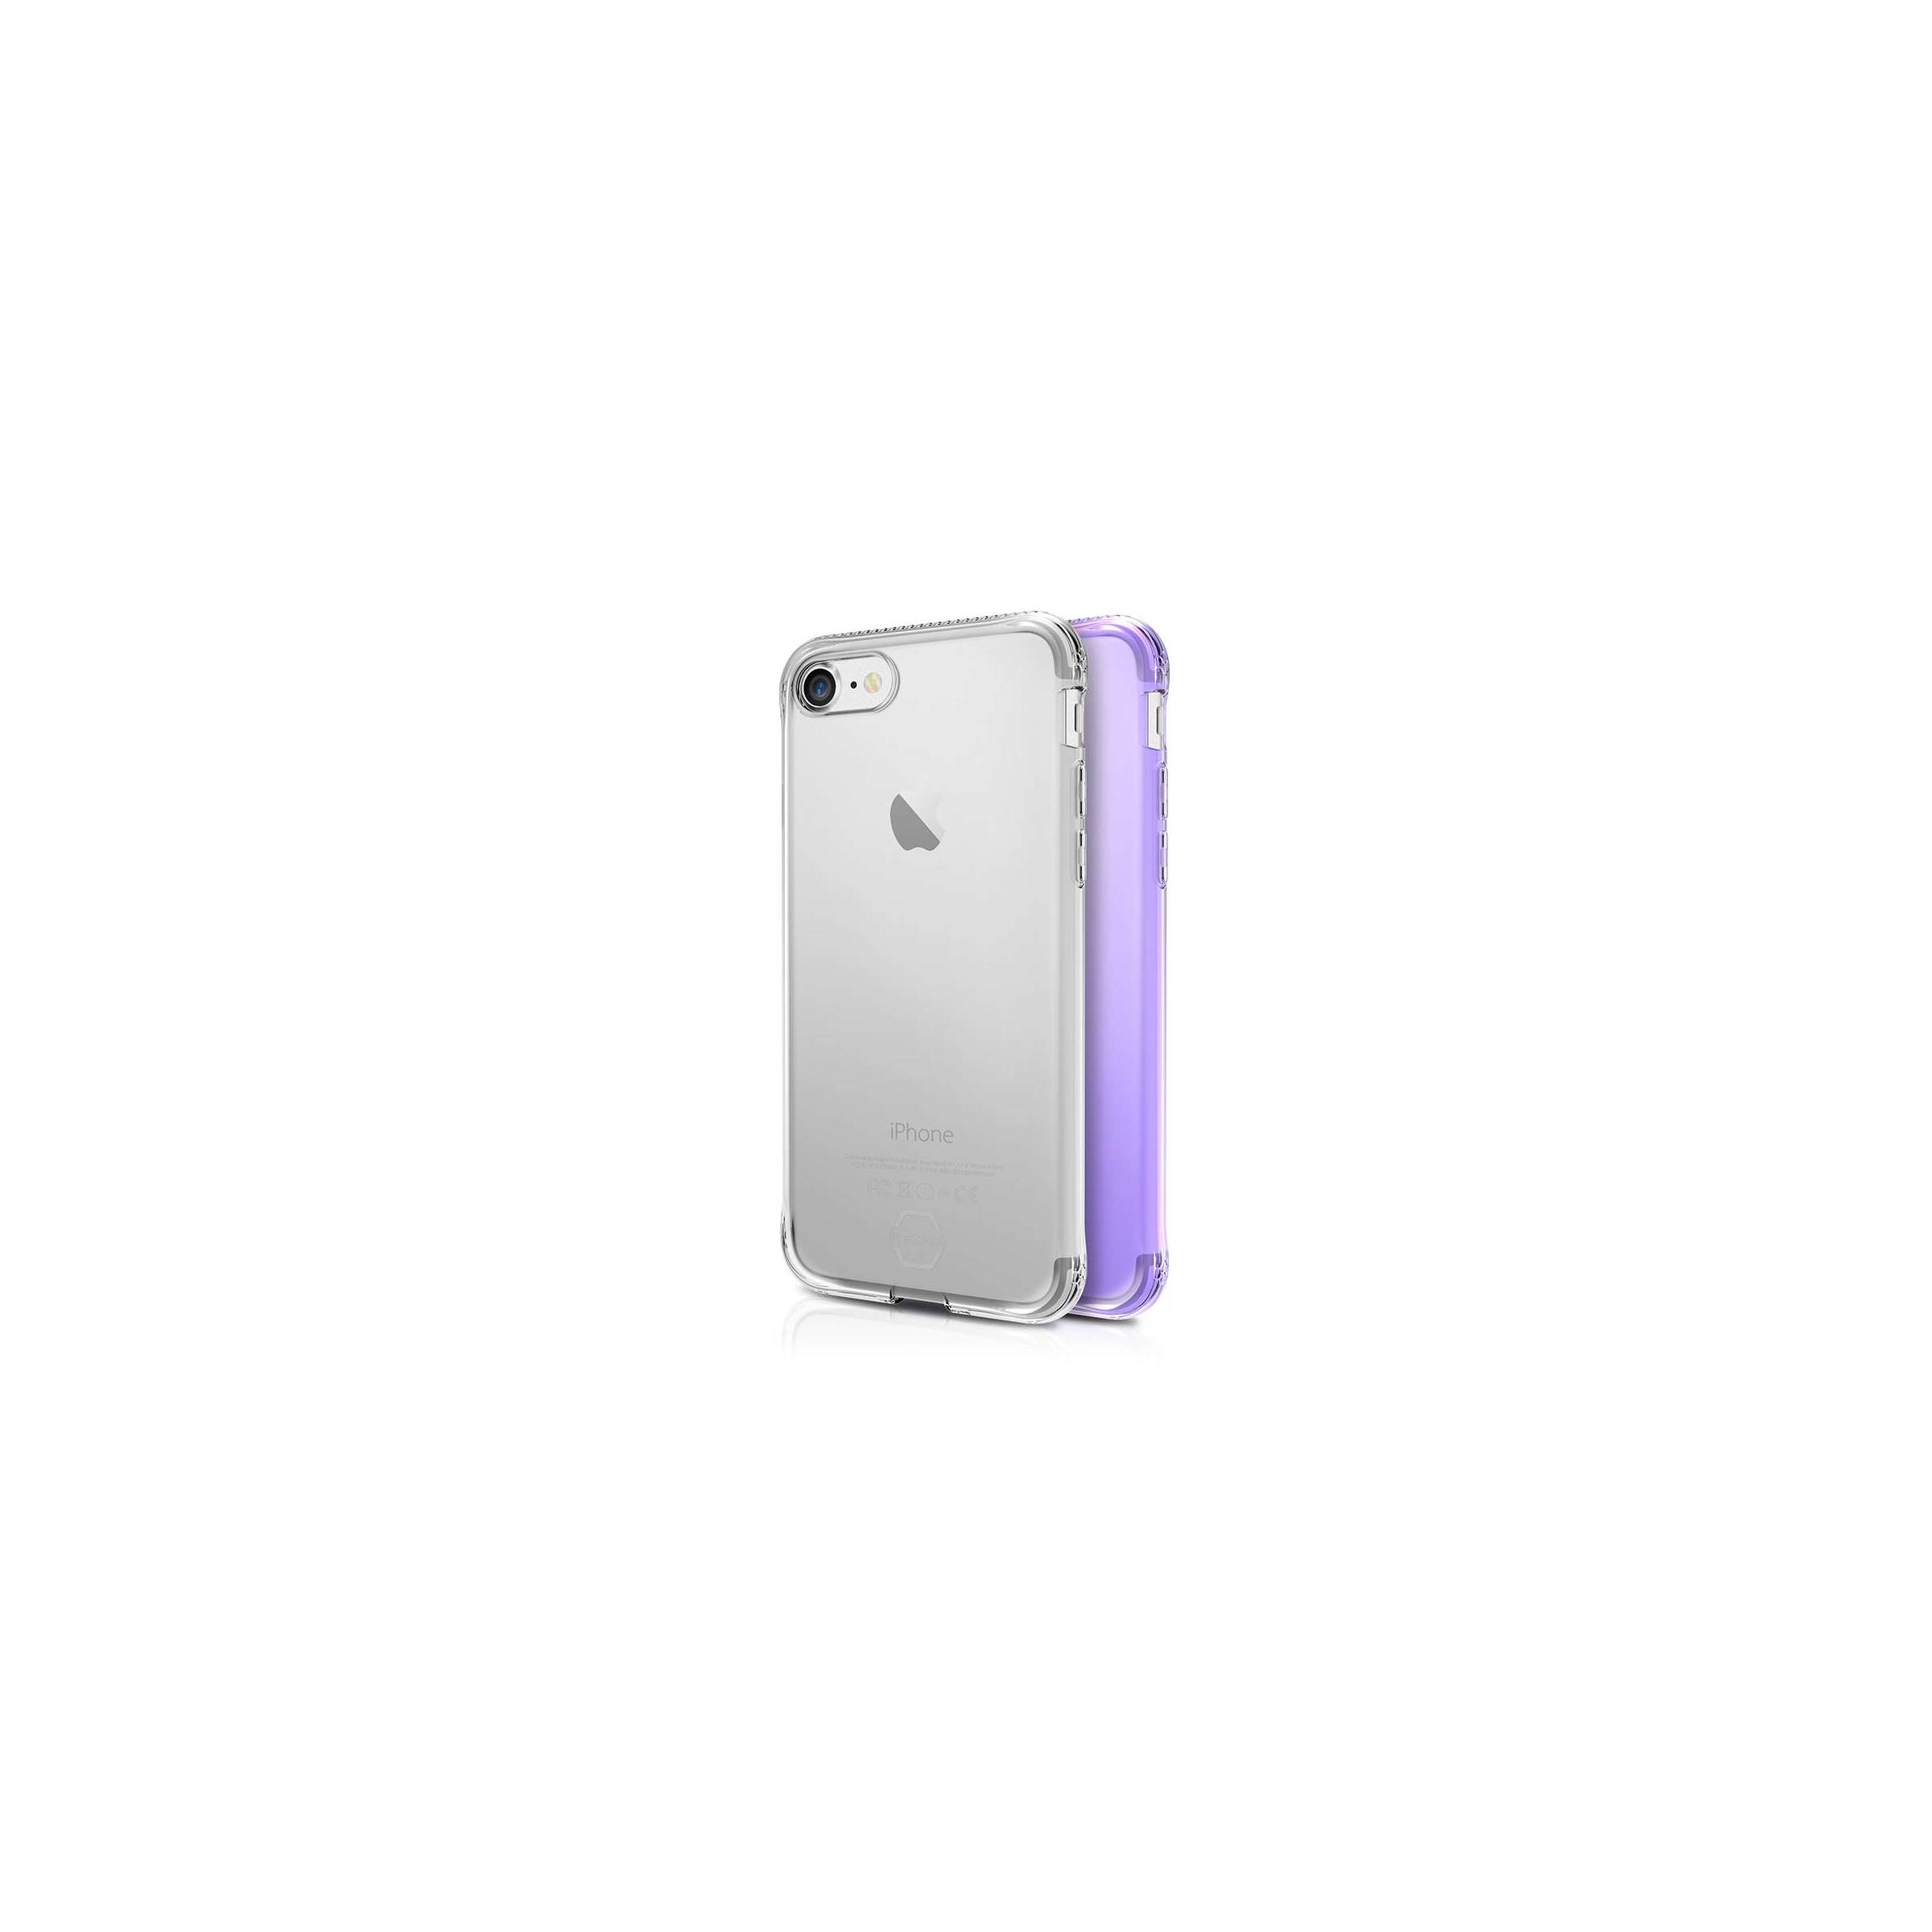 Bilde av Itskins Slim Silikon Protect Gel Iphone 6, 6s, 7 & 8 Pluss Deksel Dobbel 2x Pakke, Farge Klar & Lyse Lilla